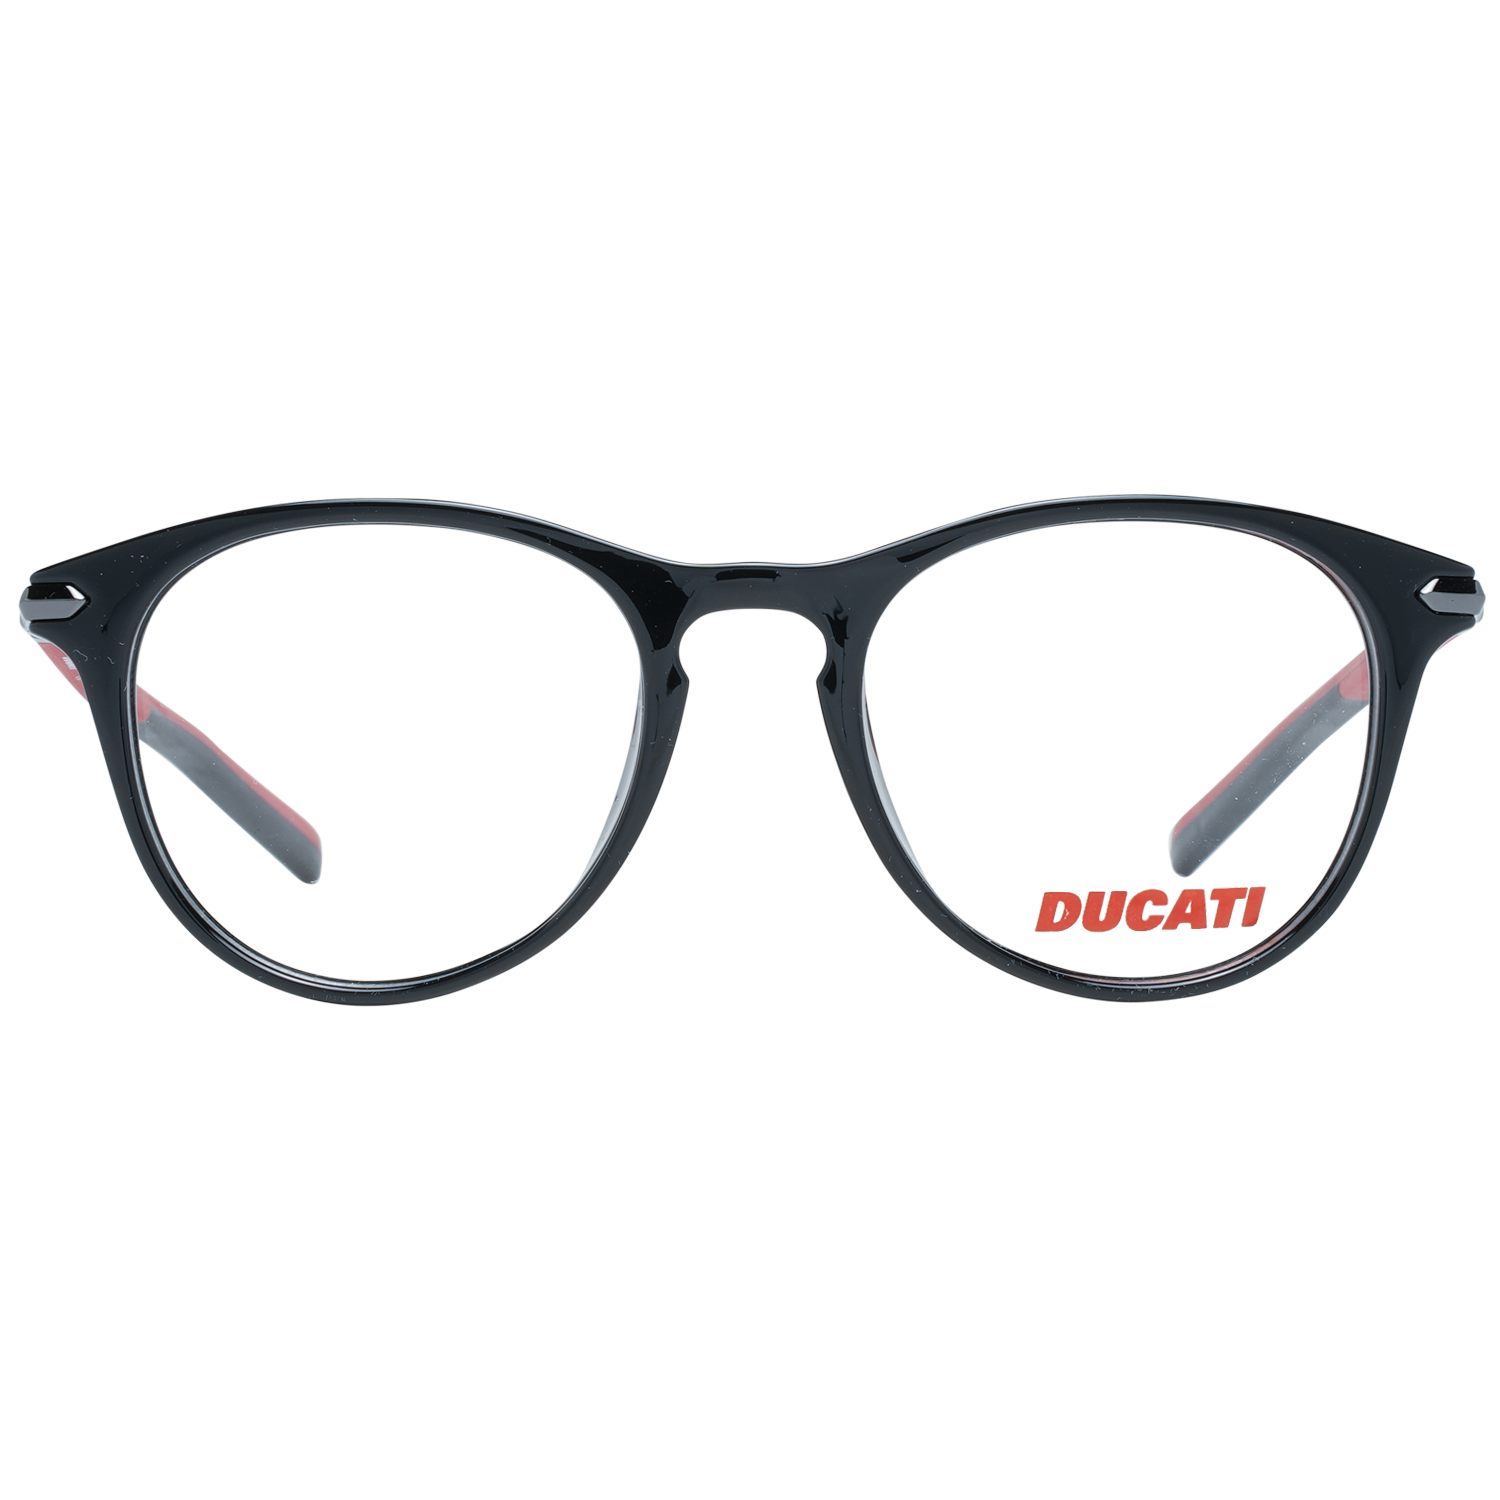 Ducati Frames Ducati Optical Frame DA1002 001 50 Eyeglasses Eyewear UK USA Australia 